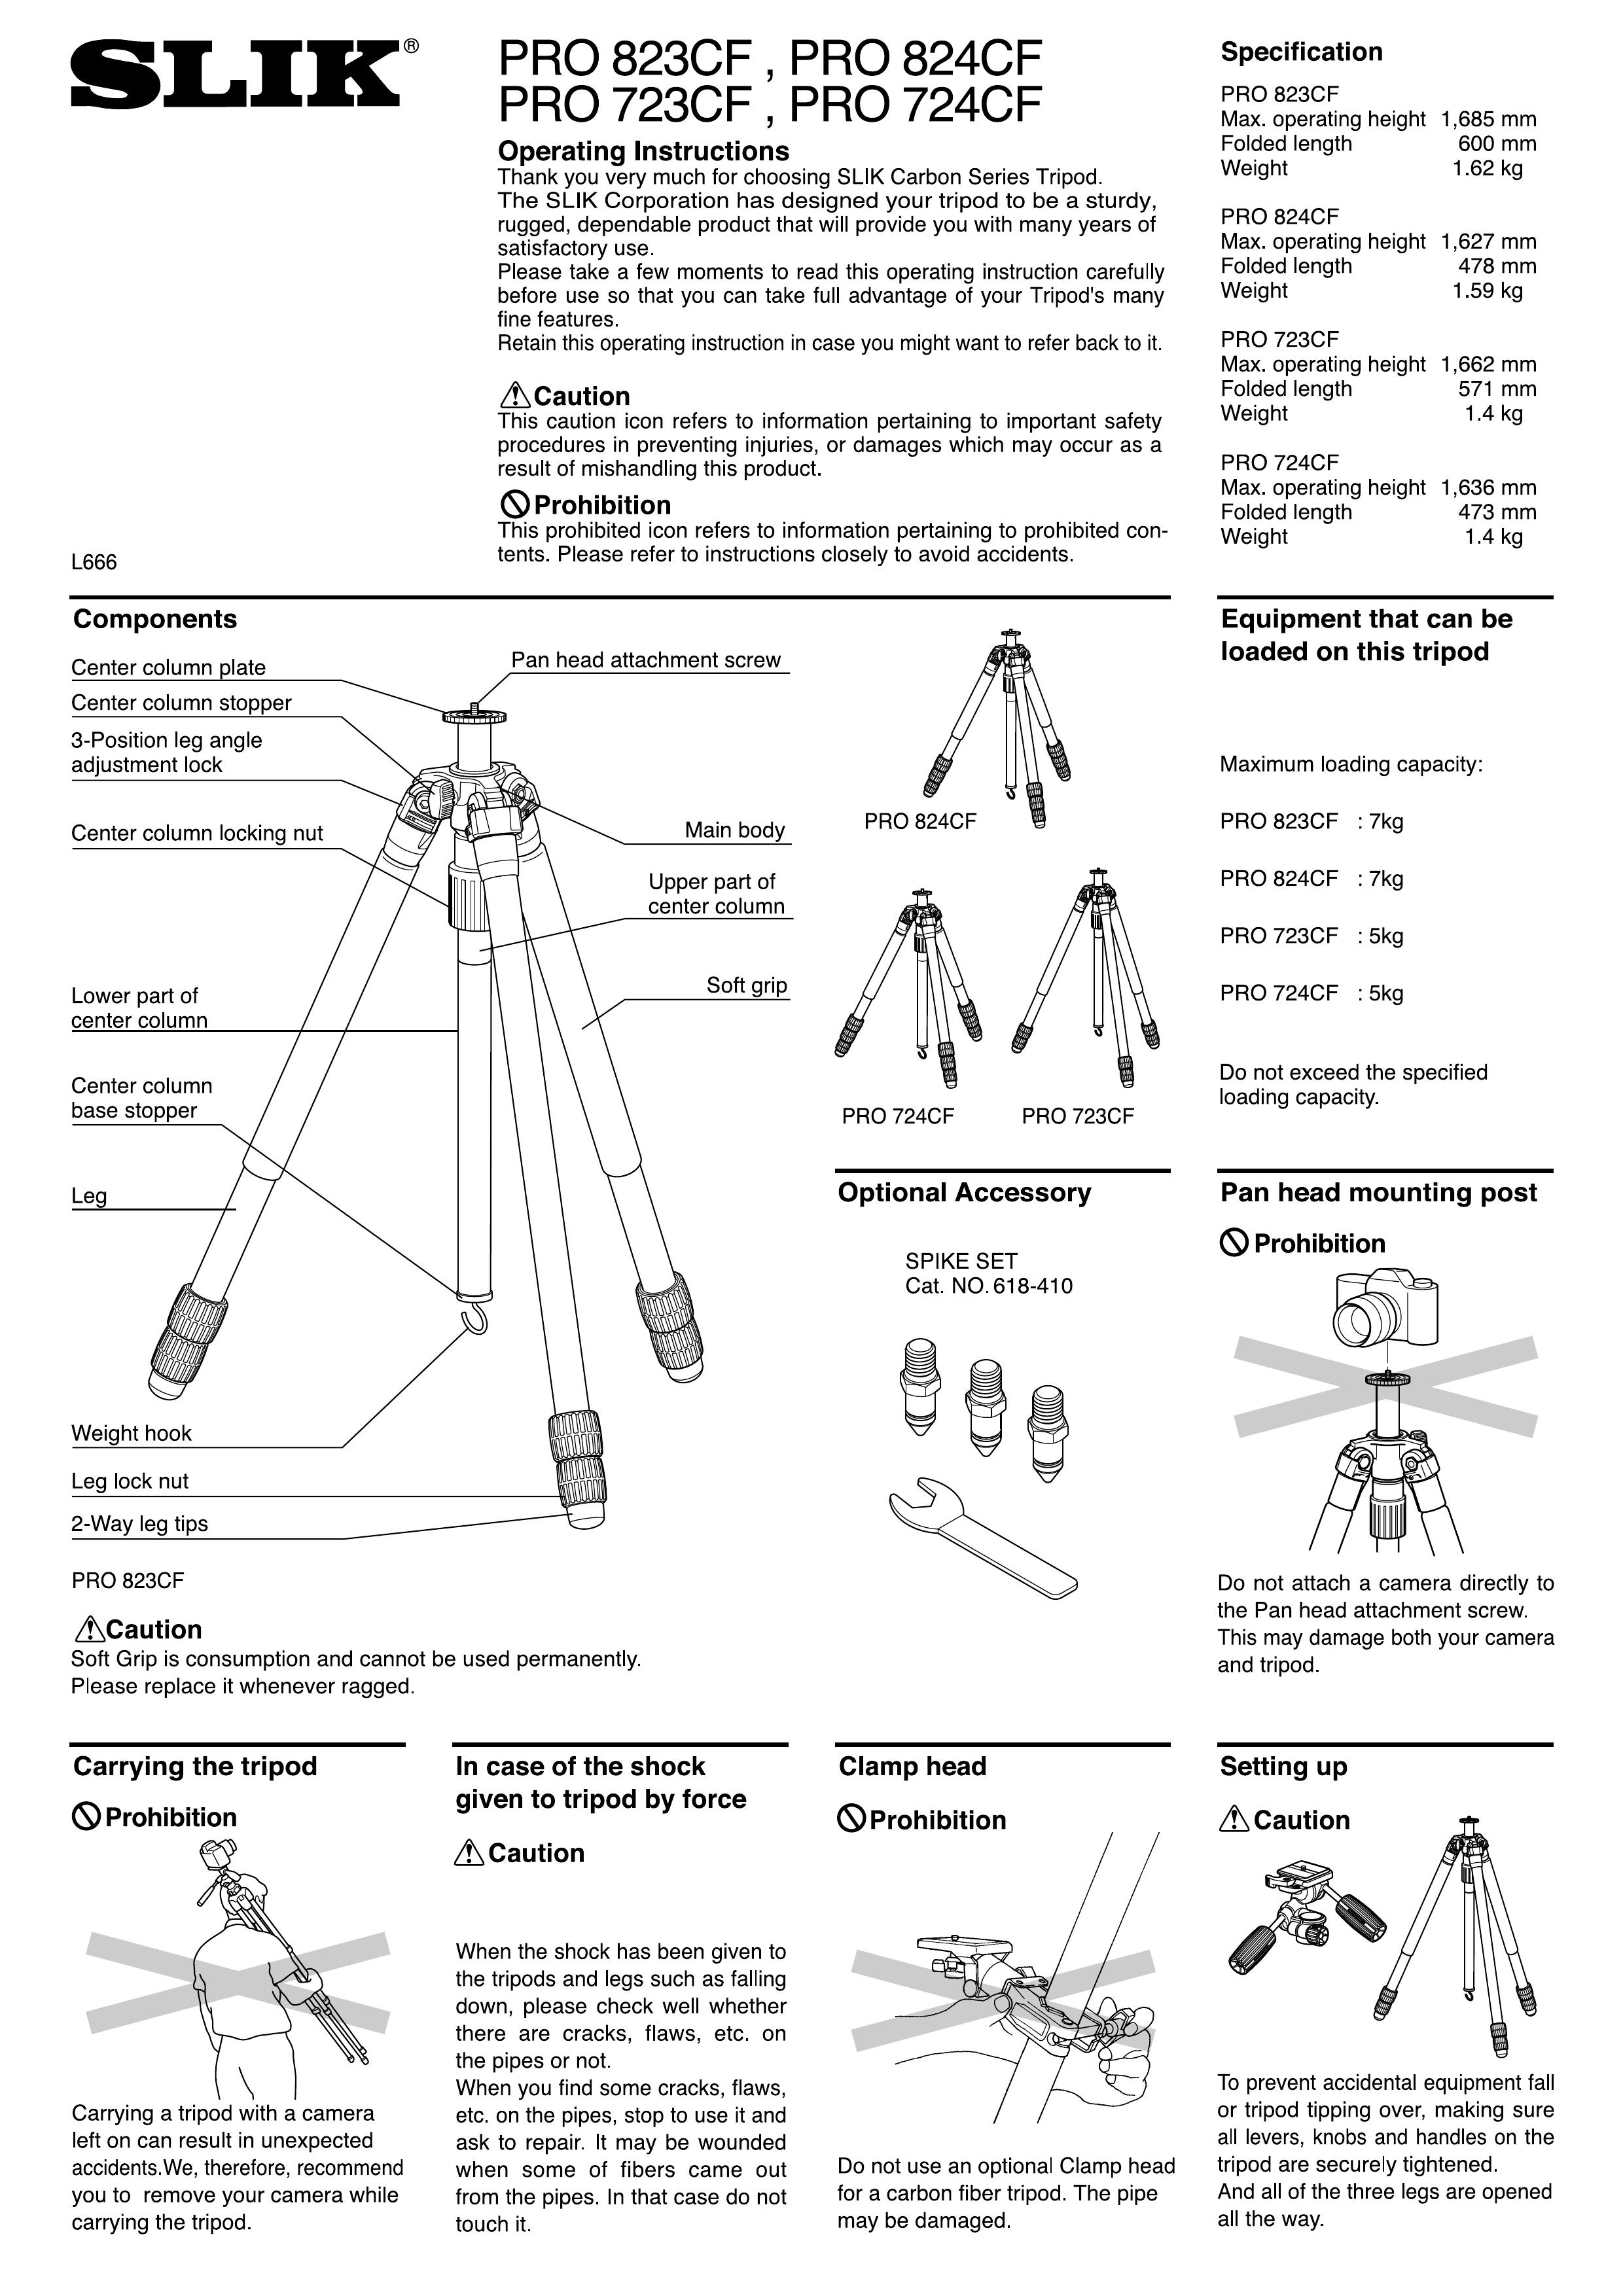 SLIK pro724cf Camcorder Accessories User Manual